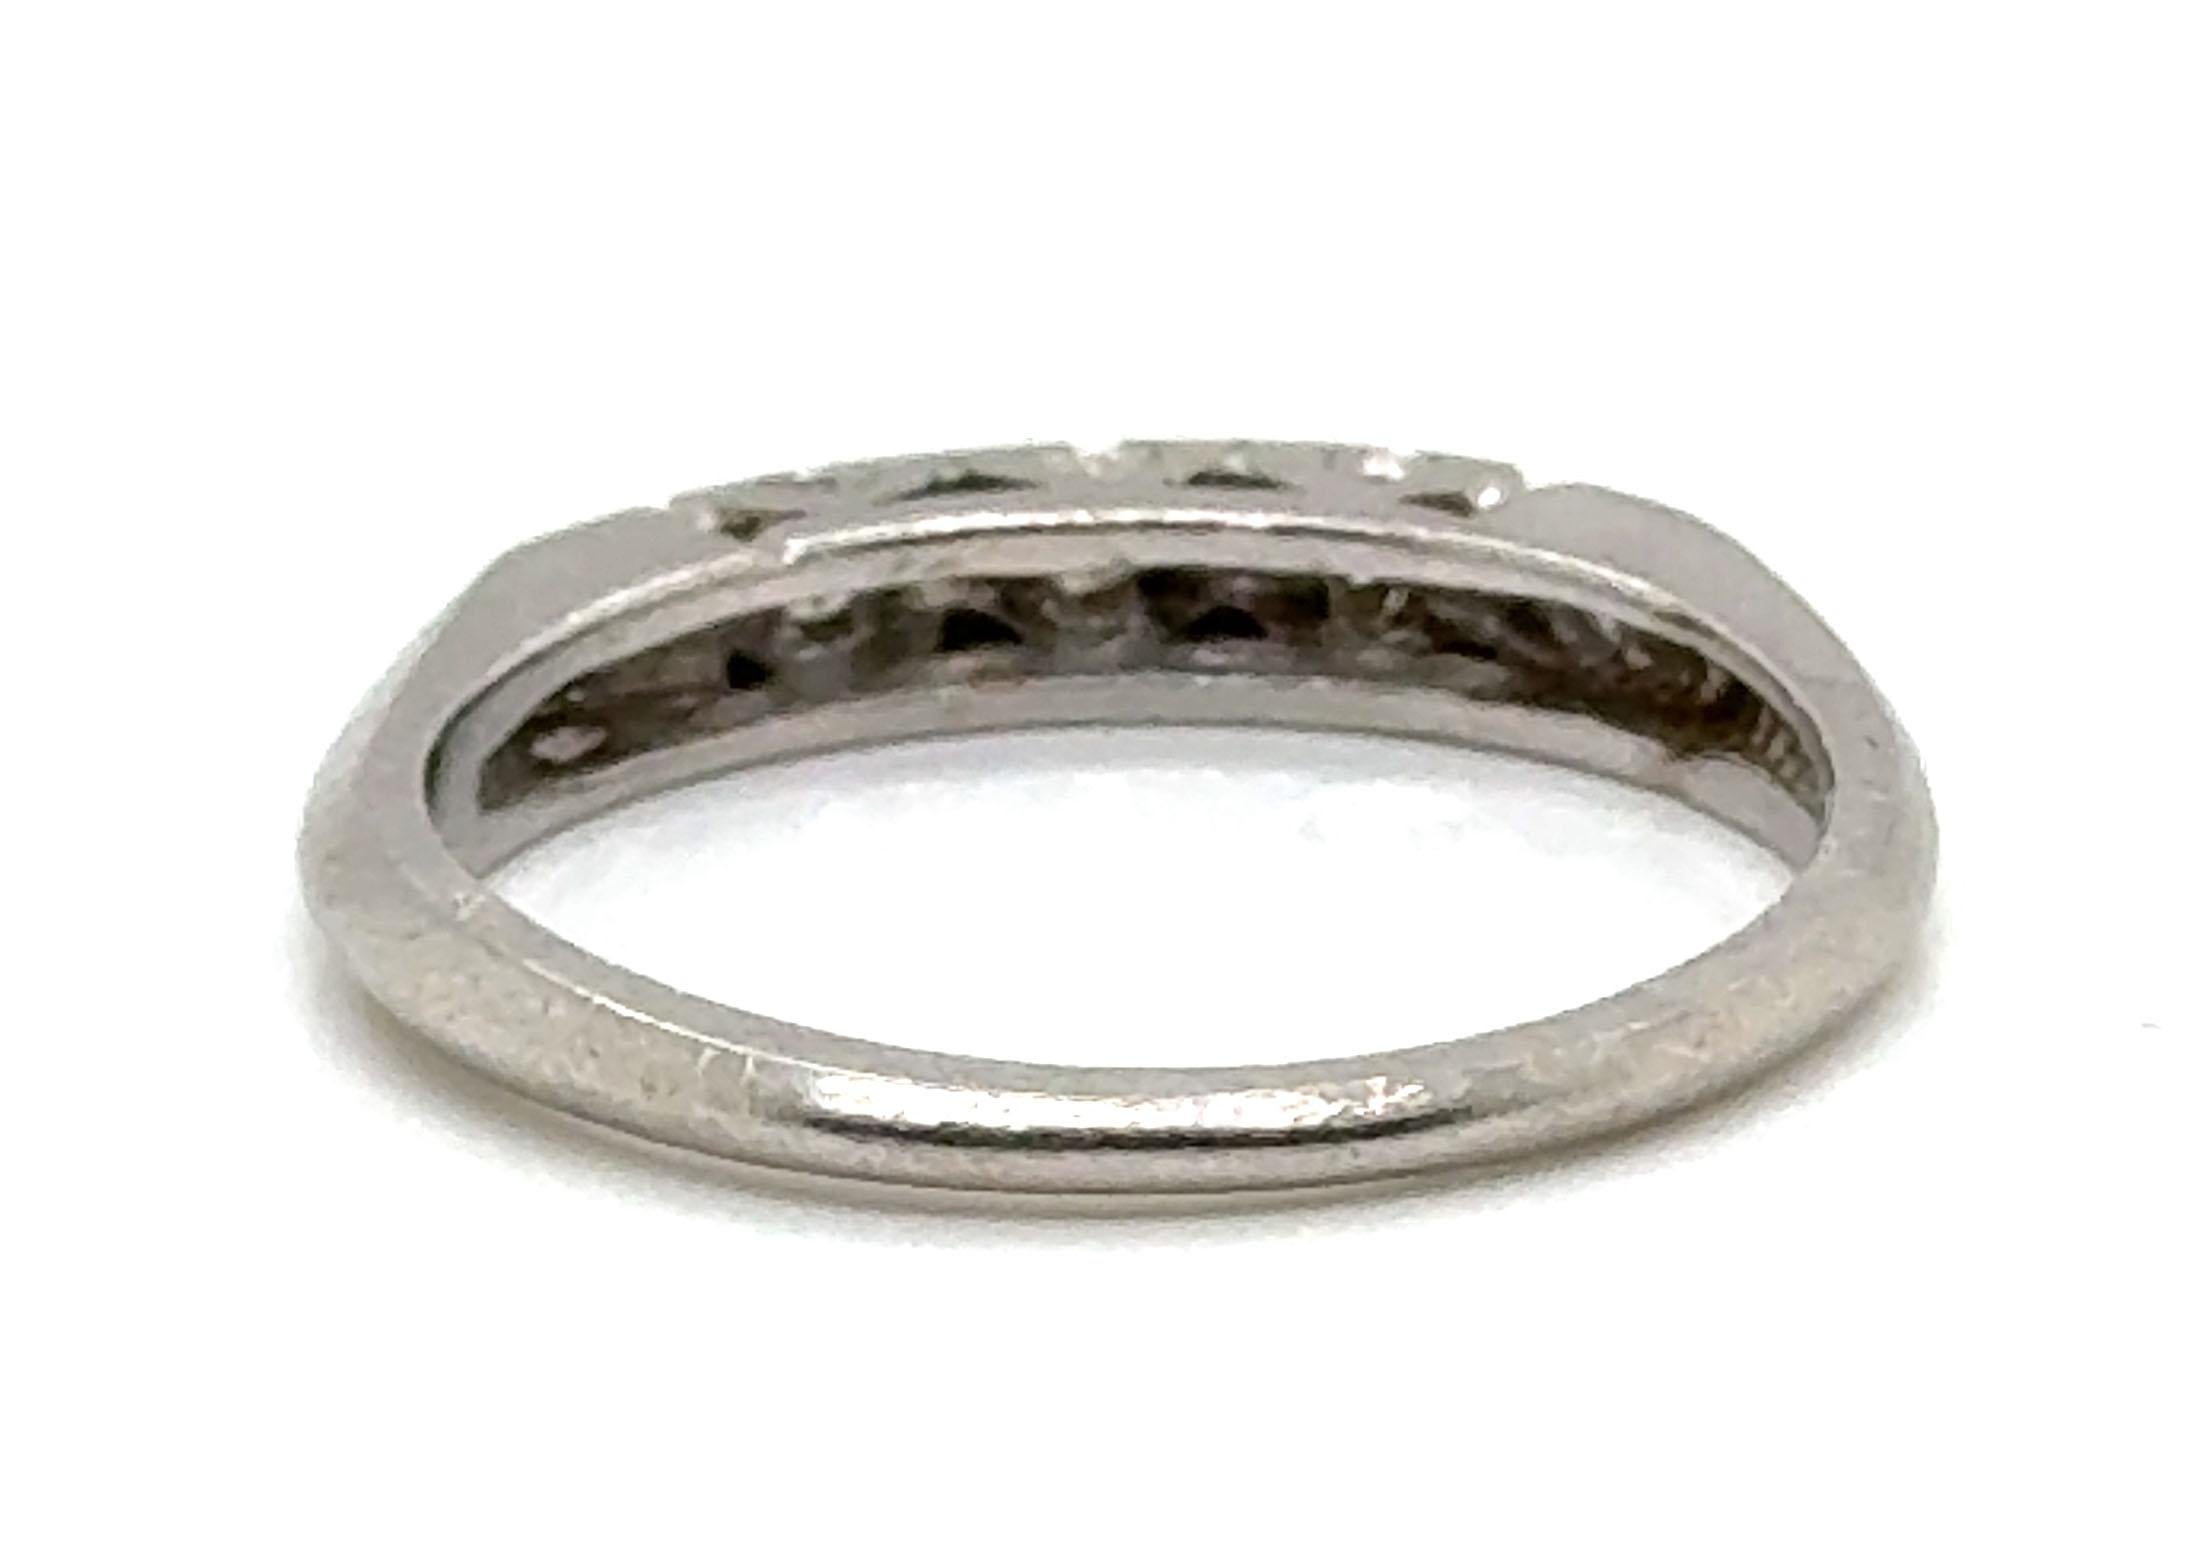  Diamond Wedding Band Genuine Antique Deco Dated 4-24-49 Platinum Ring For Sale 1